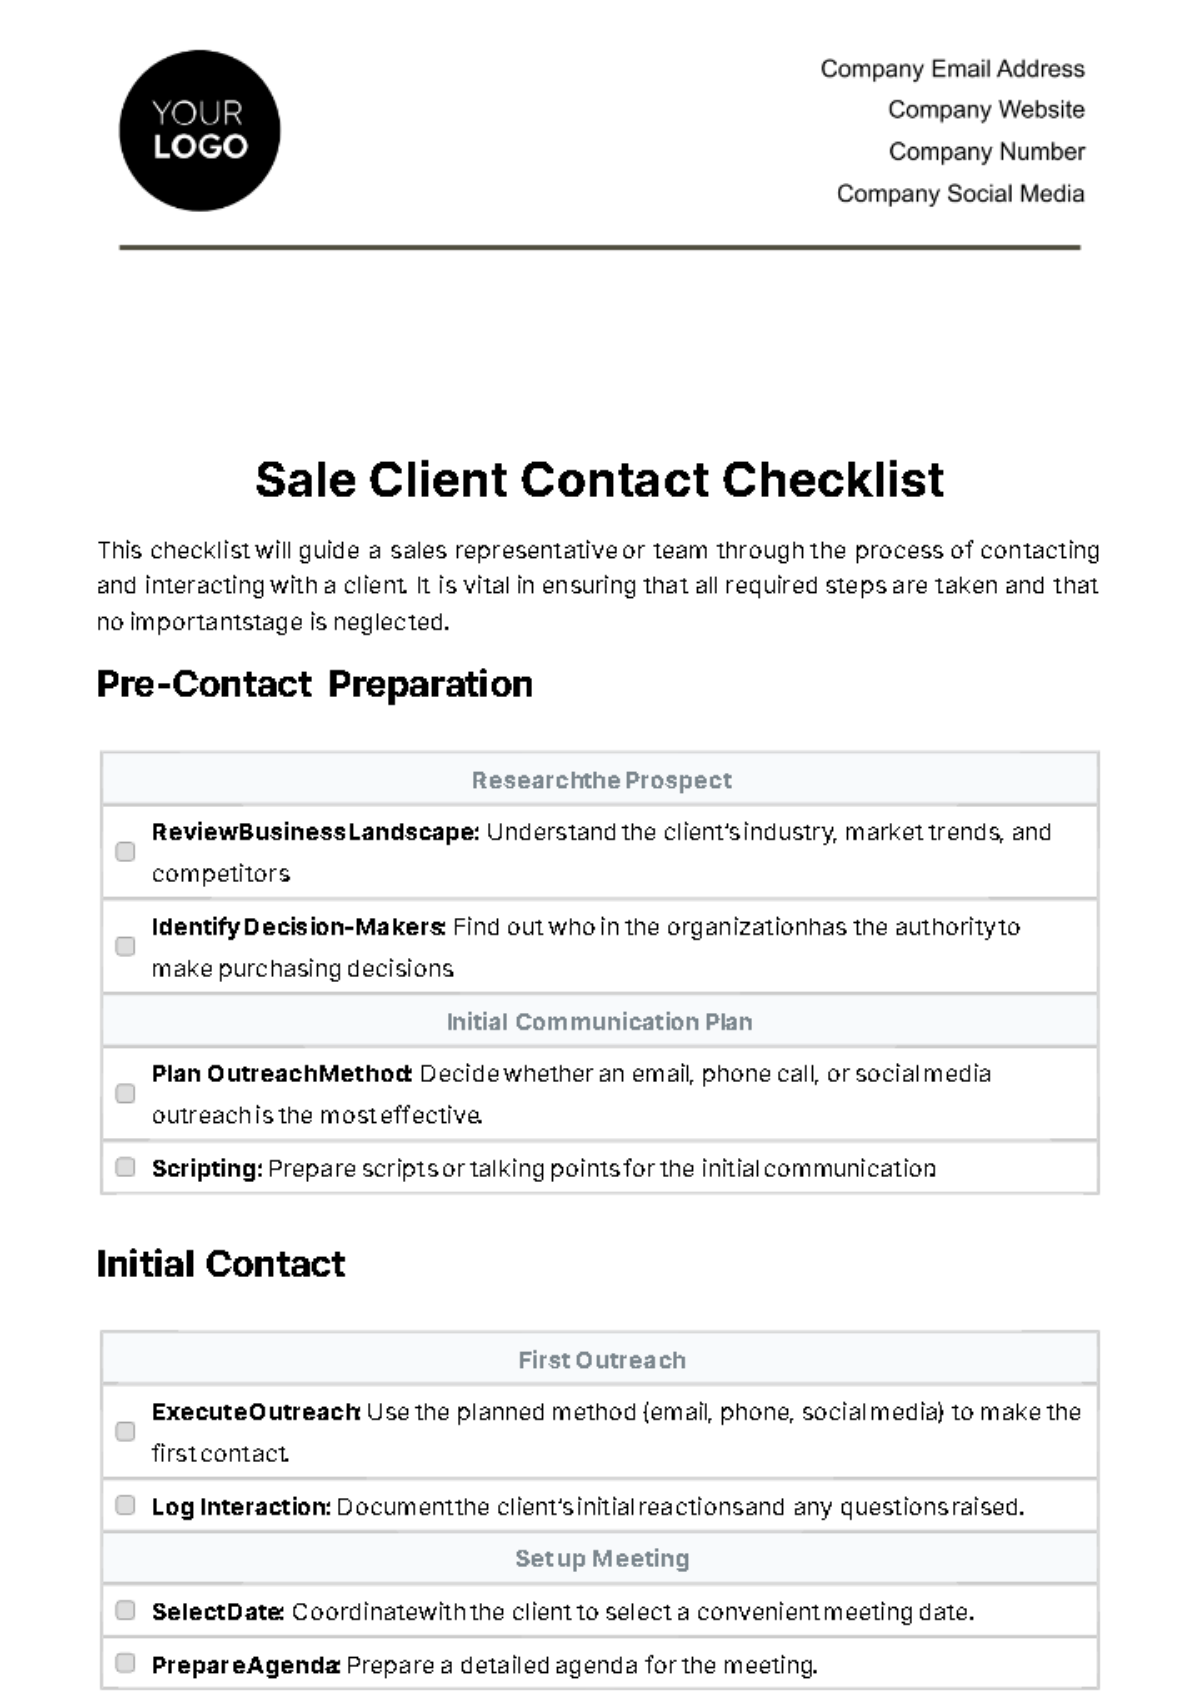 Sales Client Contact Checklist Template Edit Online Download